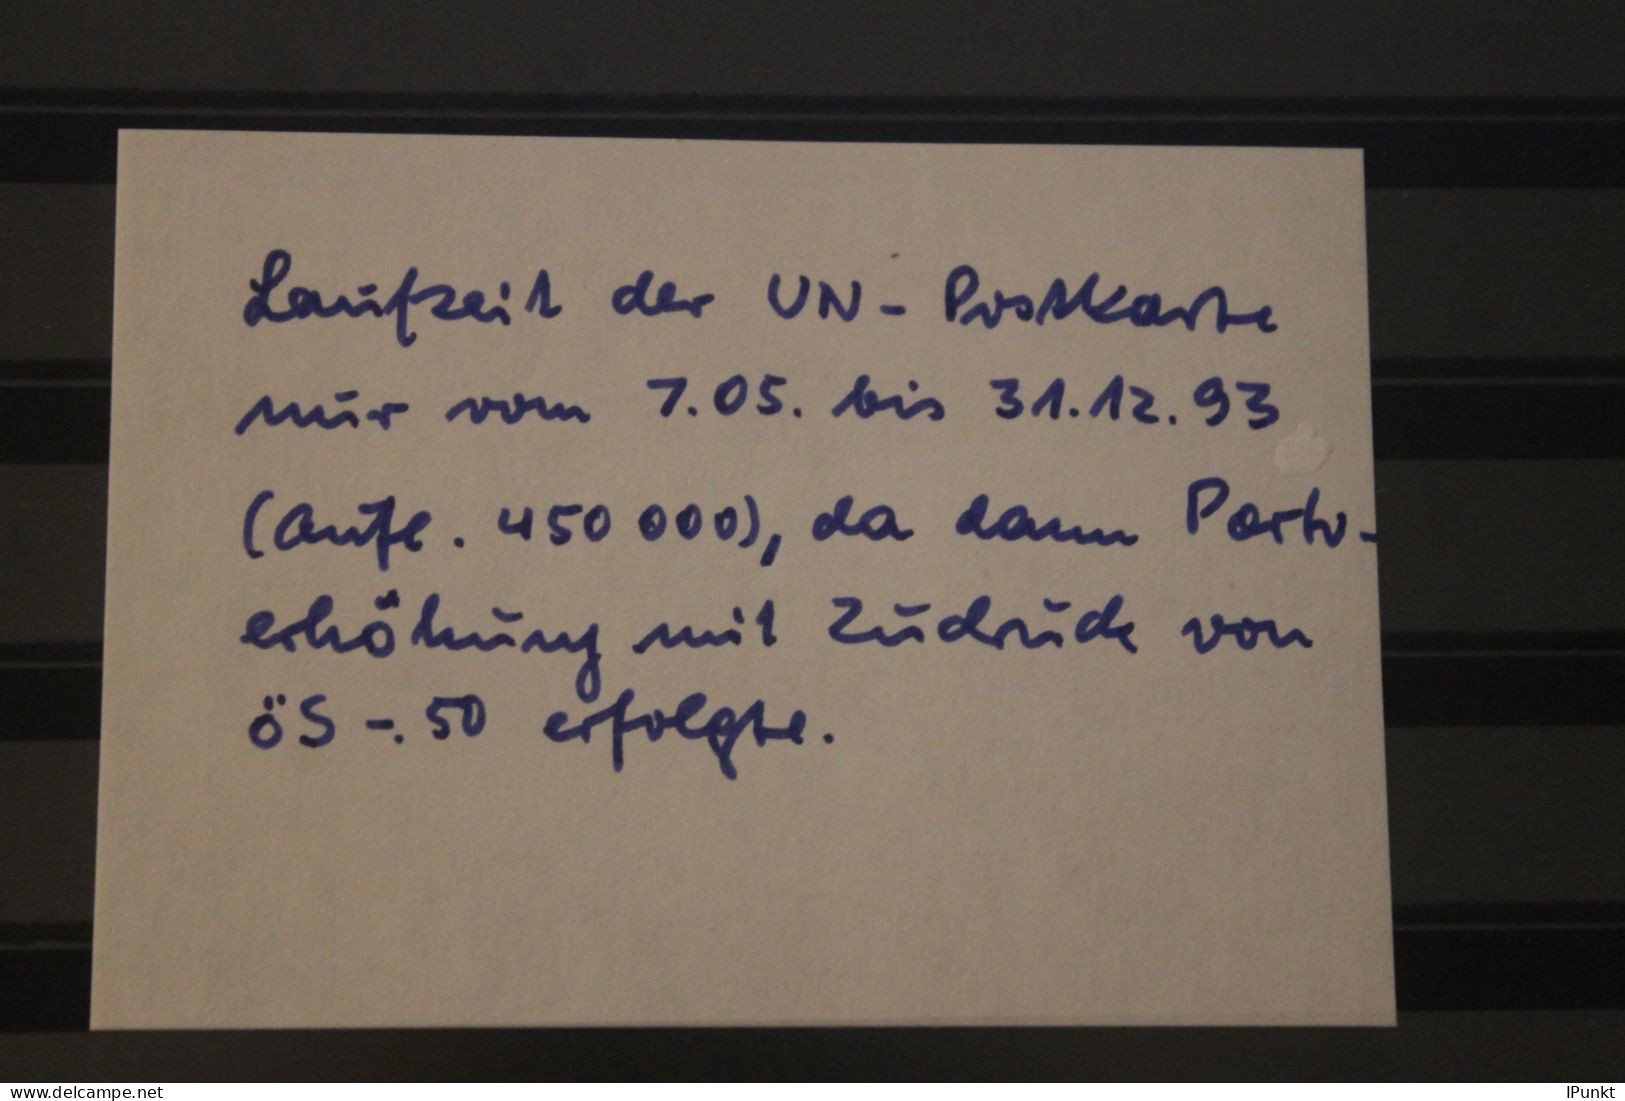 UN; UNO Wien 1993, Ganzsache; Gestempelt Selten, Lesen - Covers & Documents